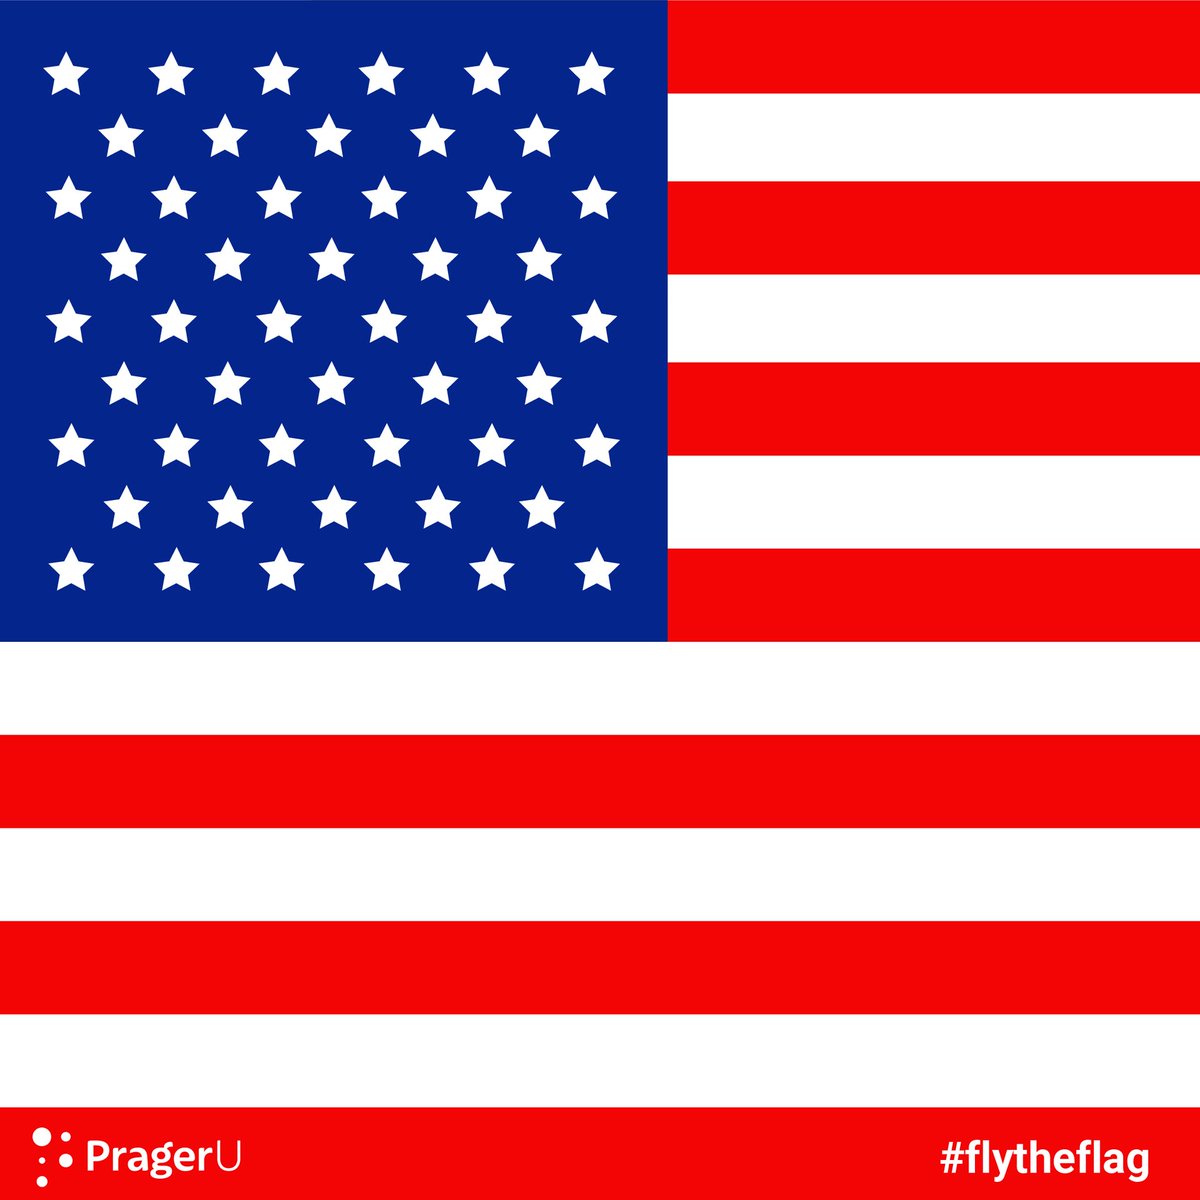 Happy Independence Day 

#CelebrateAmerica #FlyTheFlag